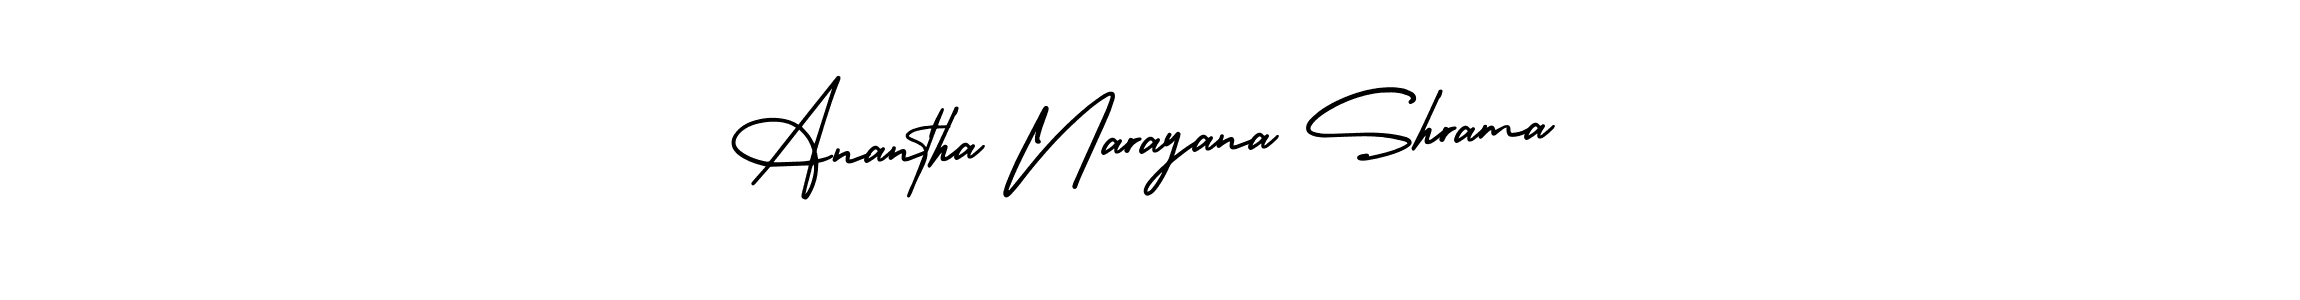 Best and Professional Signature Style for Anantha Narayana Shrama. AmerikaSignatureDemo-Regular Best Signature Style Collection. Anantha Narayana Shrama signature style 3 images and pictures png